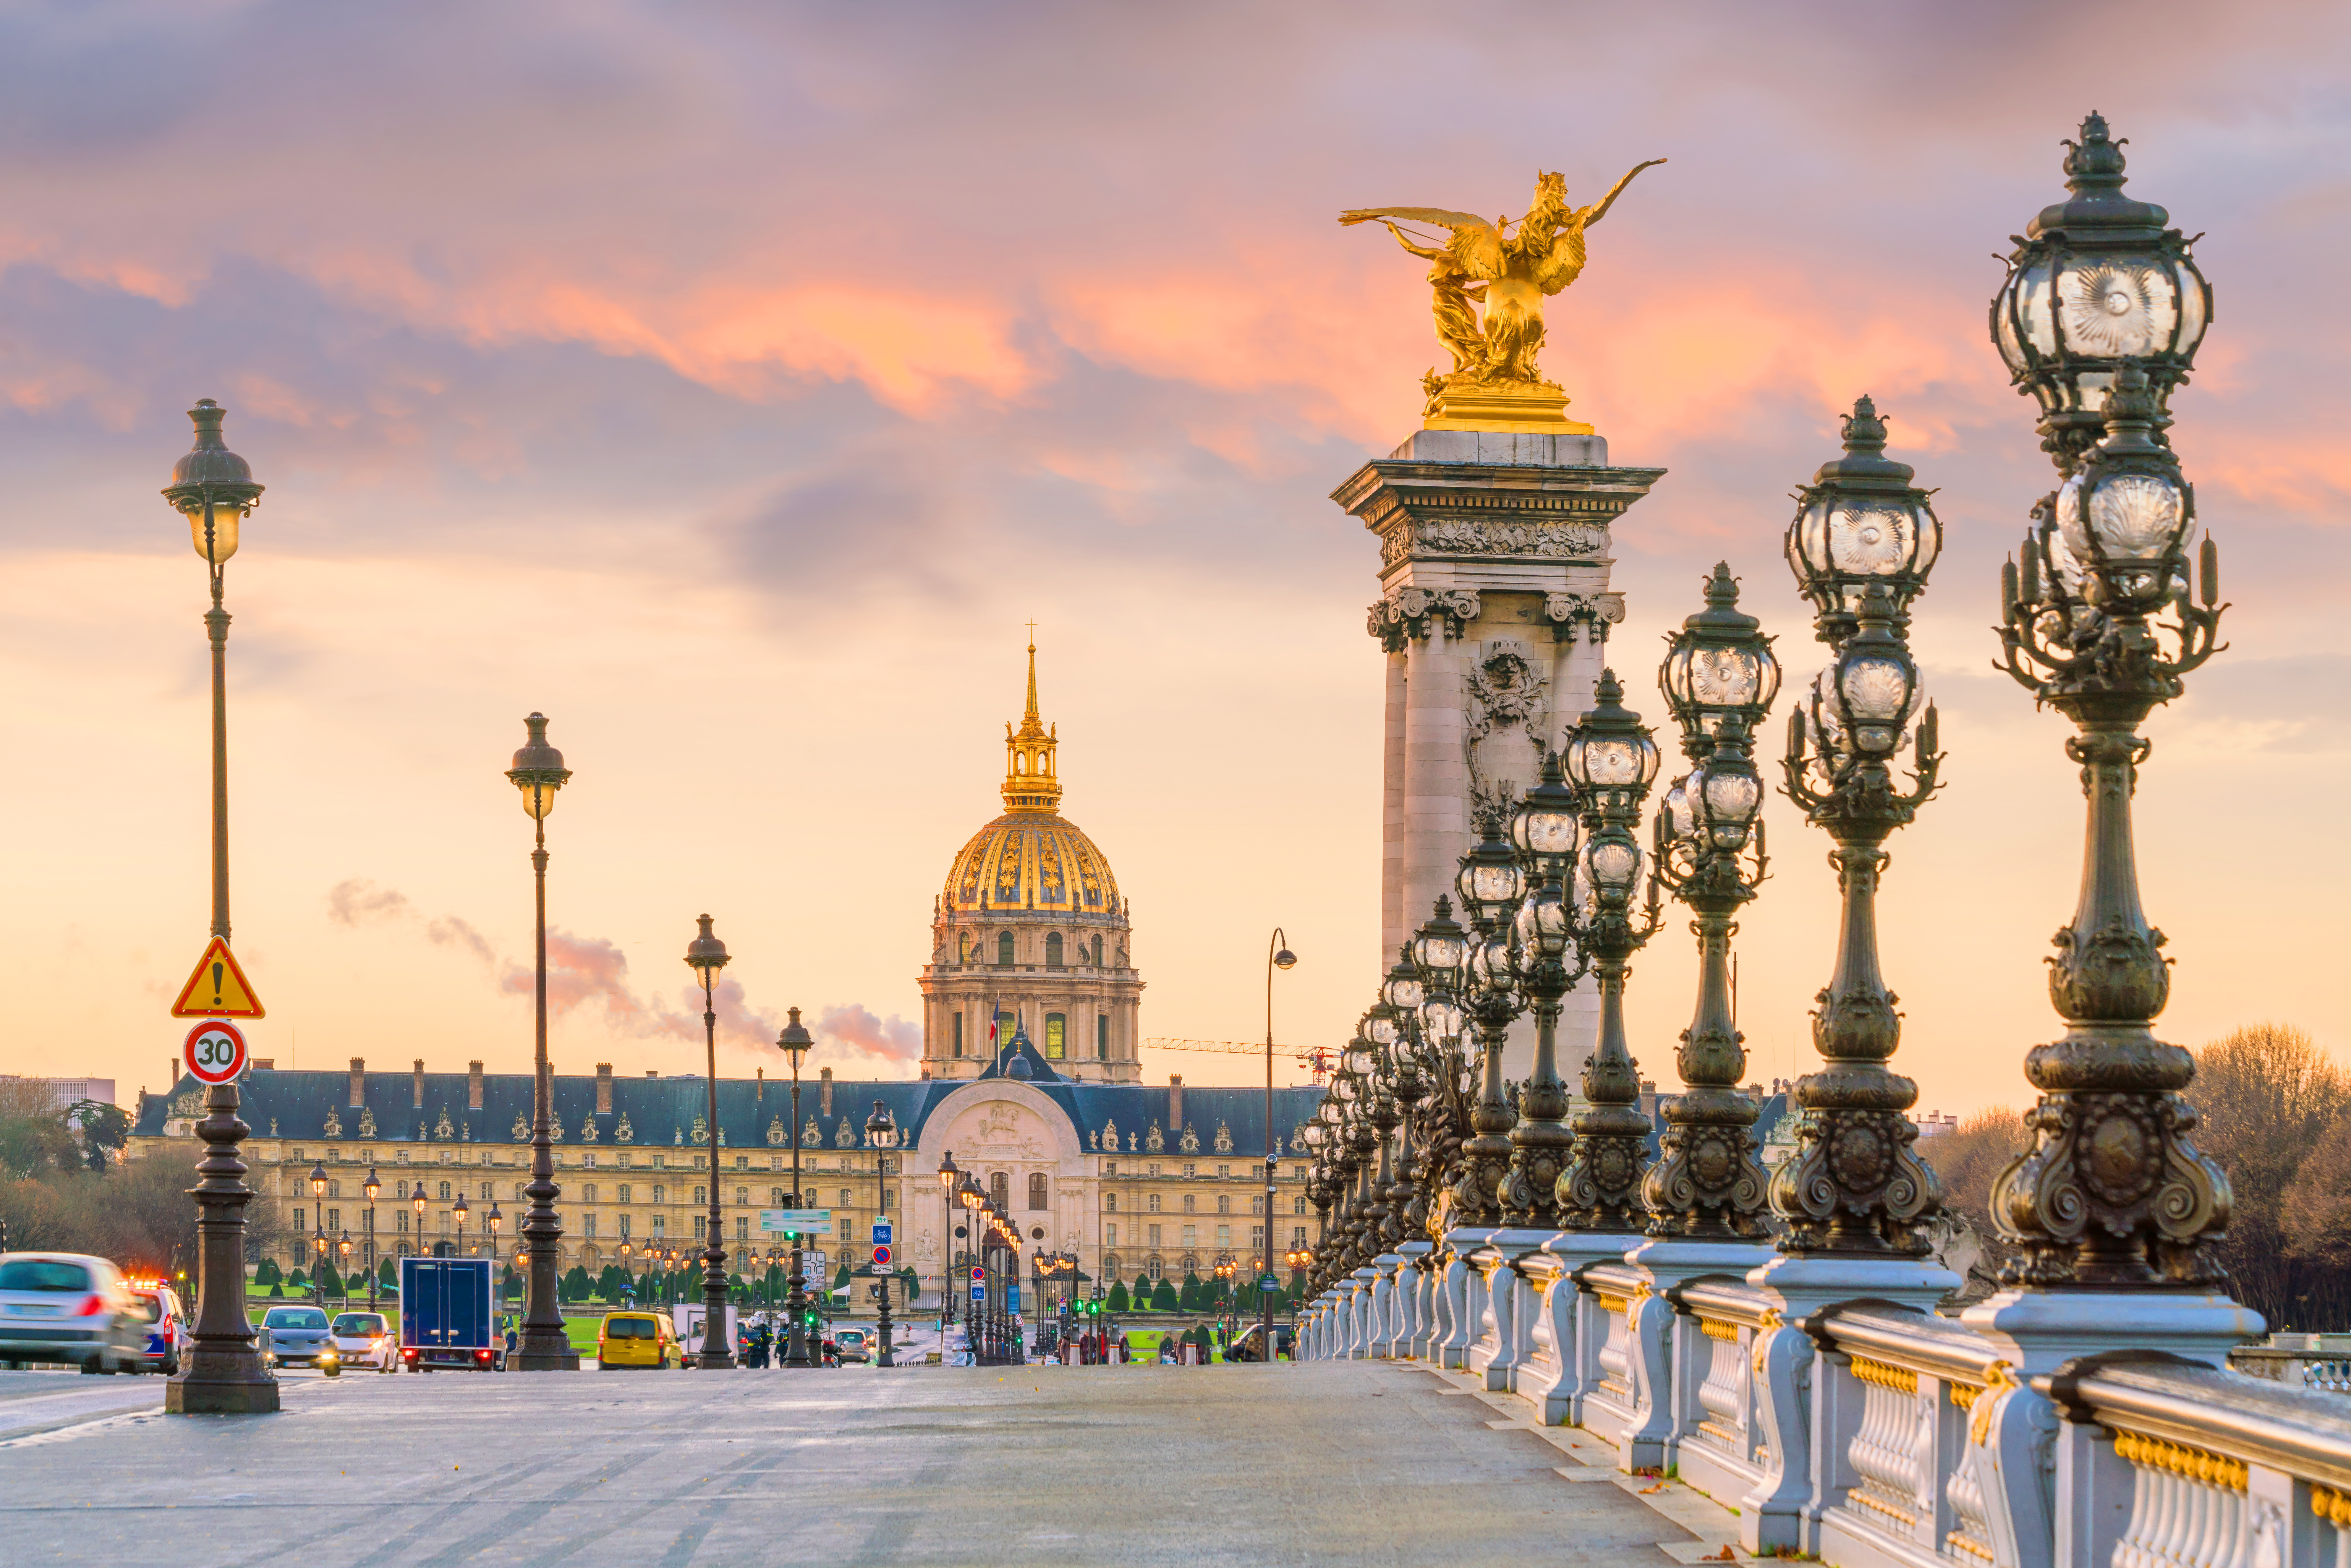 The Alexander III Bridge across Seine river in Paris, France at sunrise